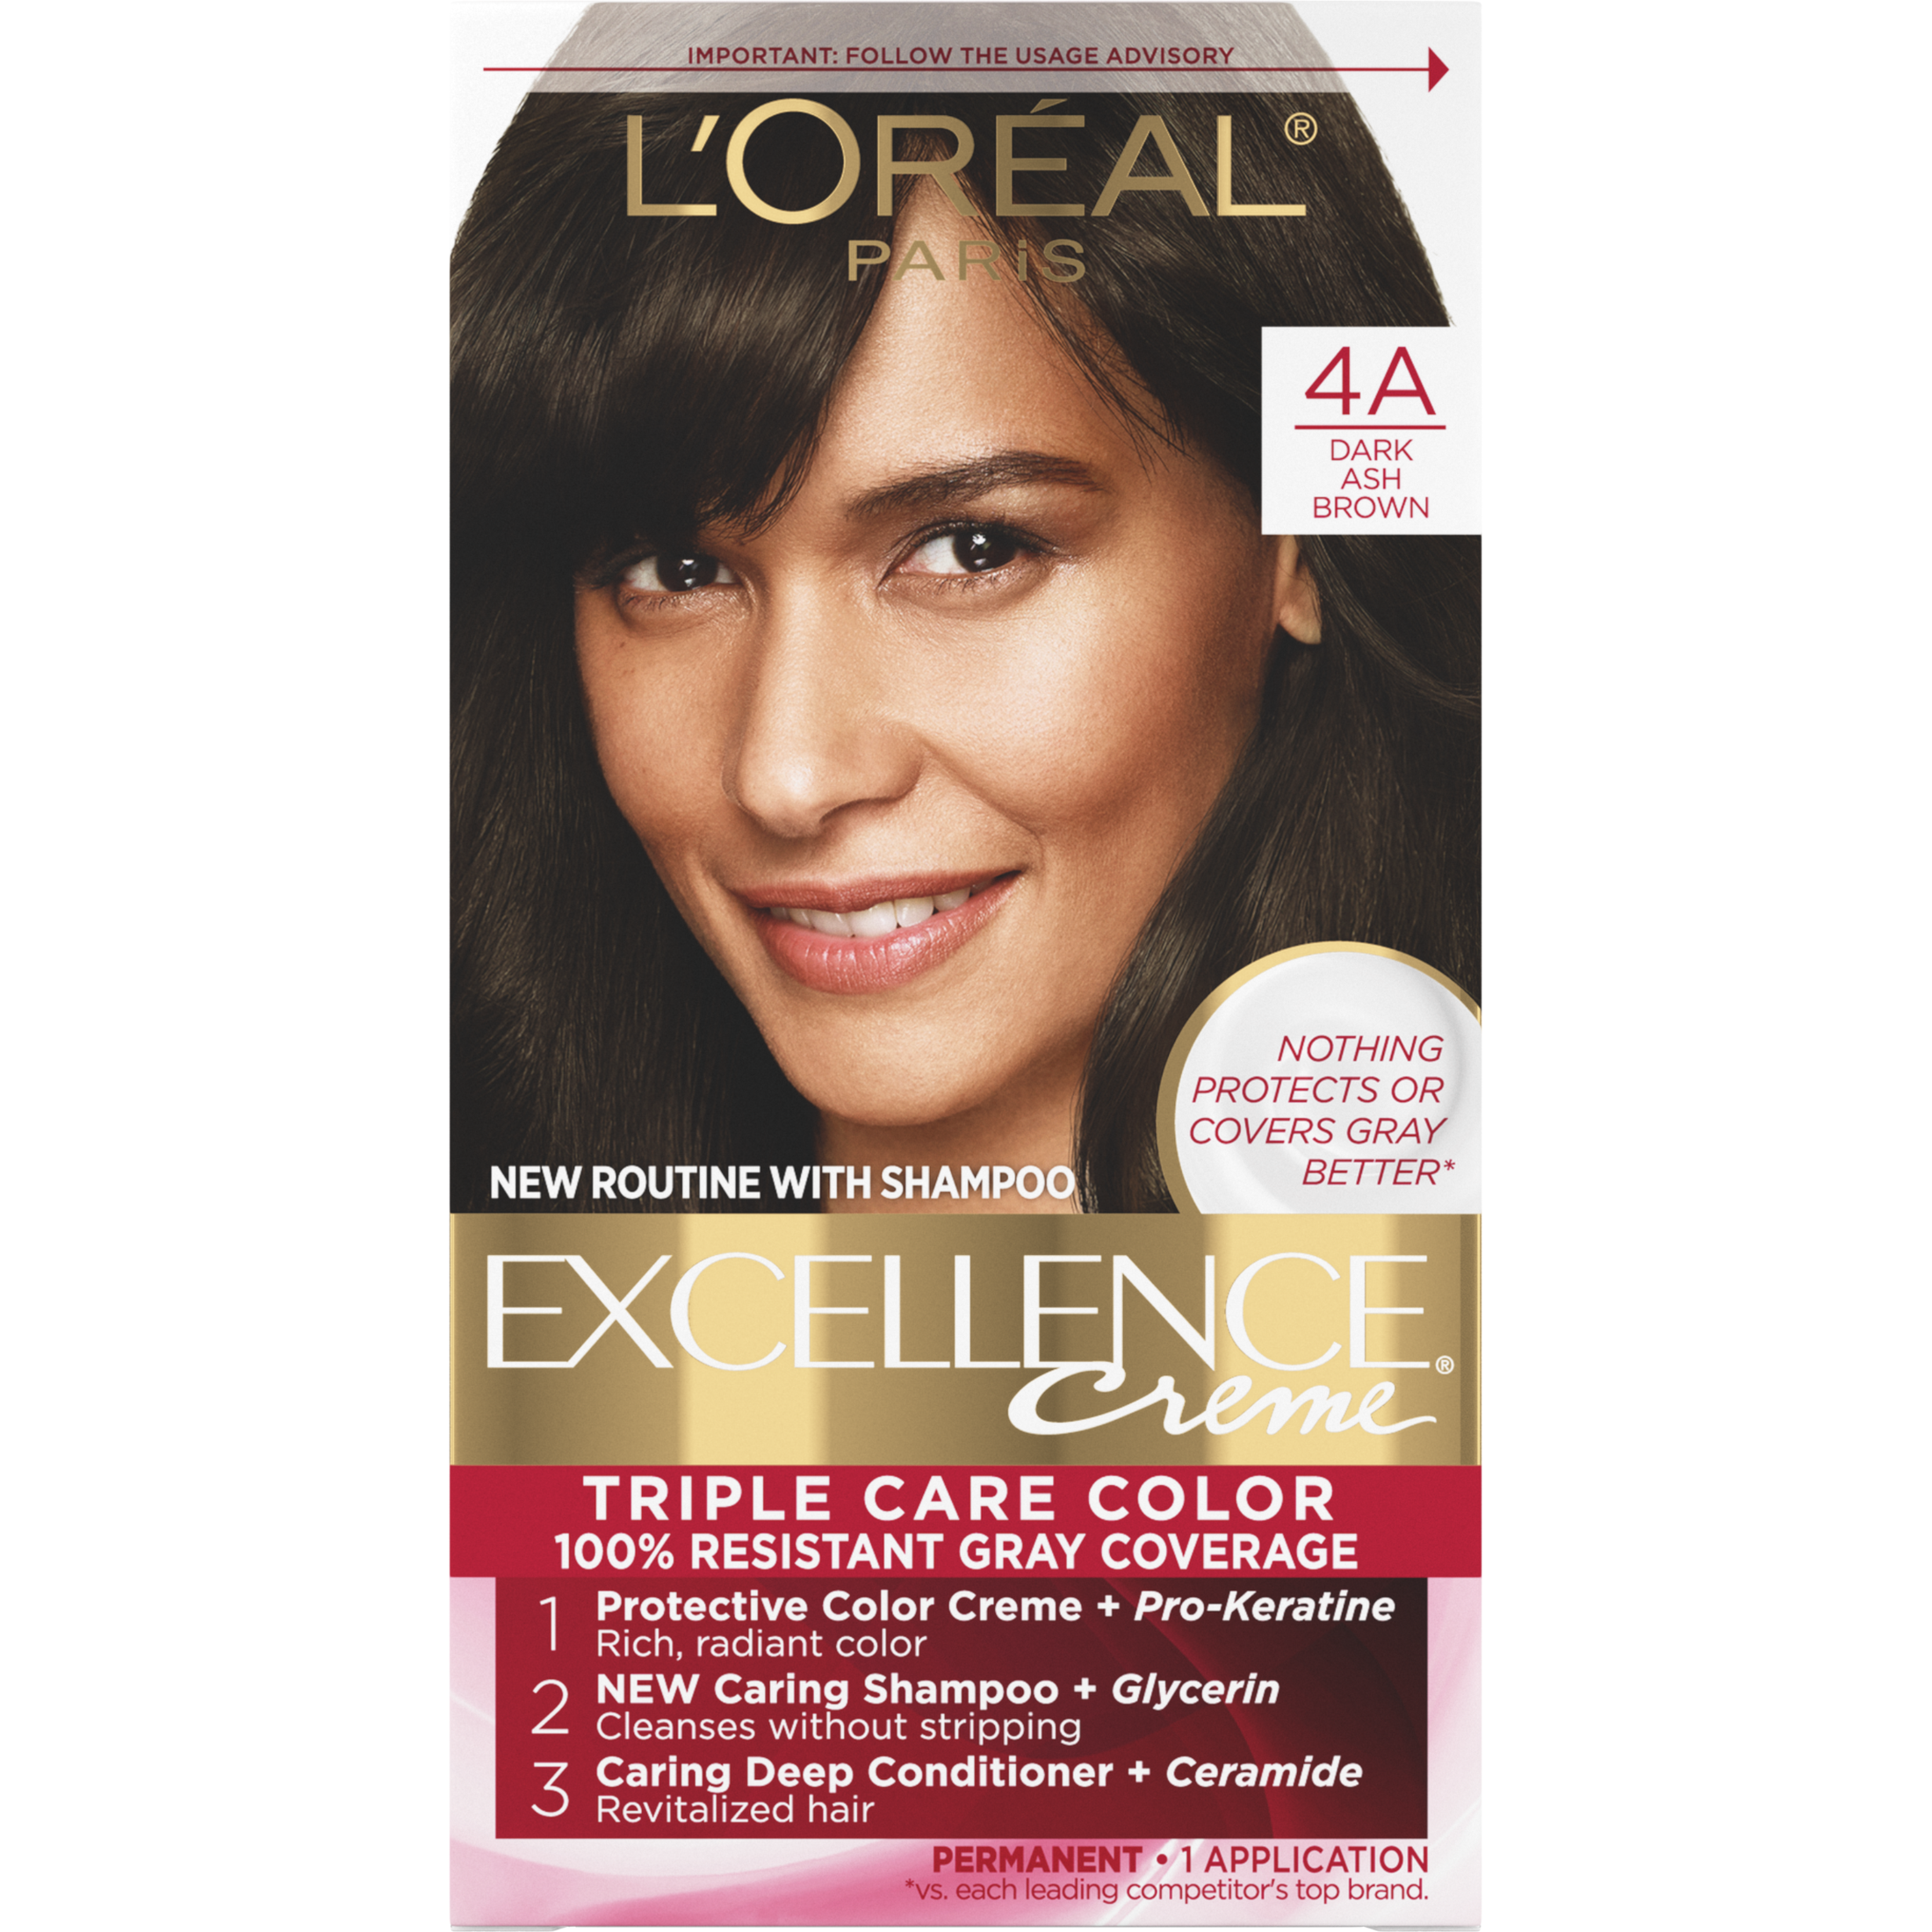 L'Oreal Paris Excellence Creme Permanent Hair Color, 4A Dark Ash Brown - image 1 of 8